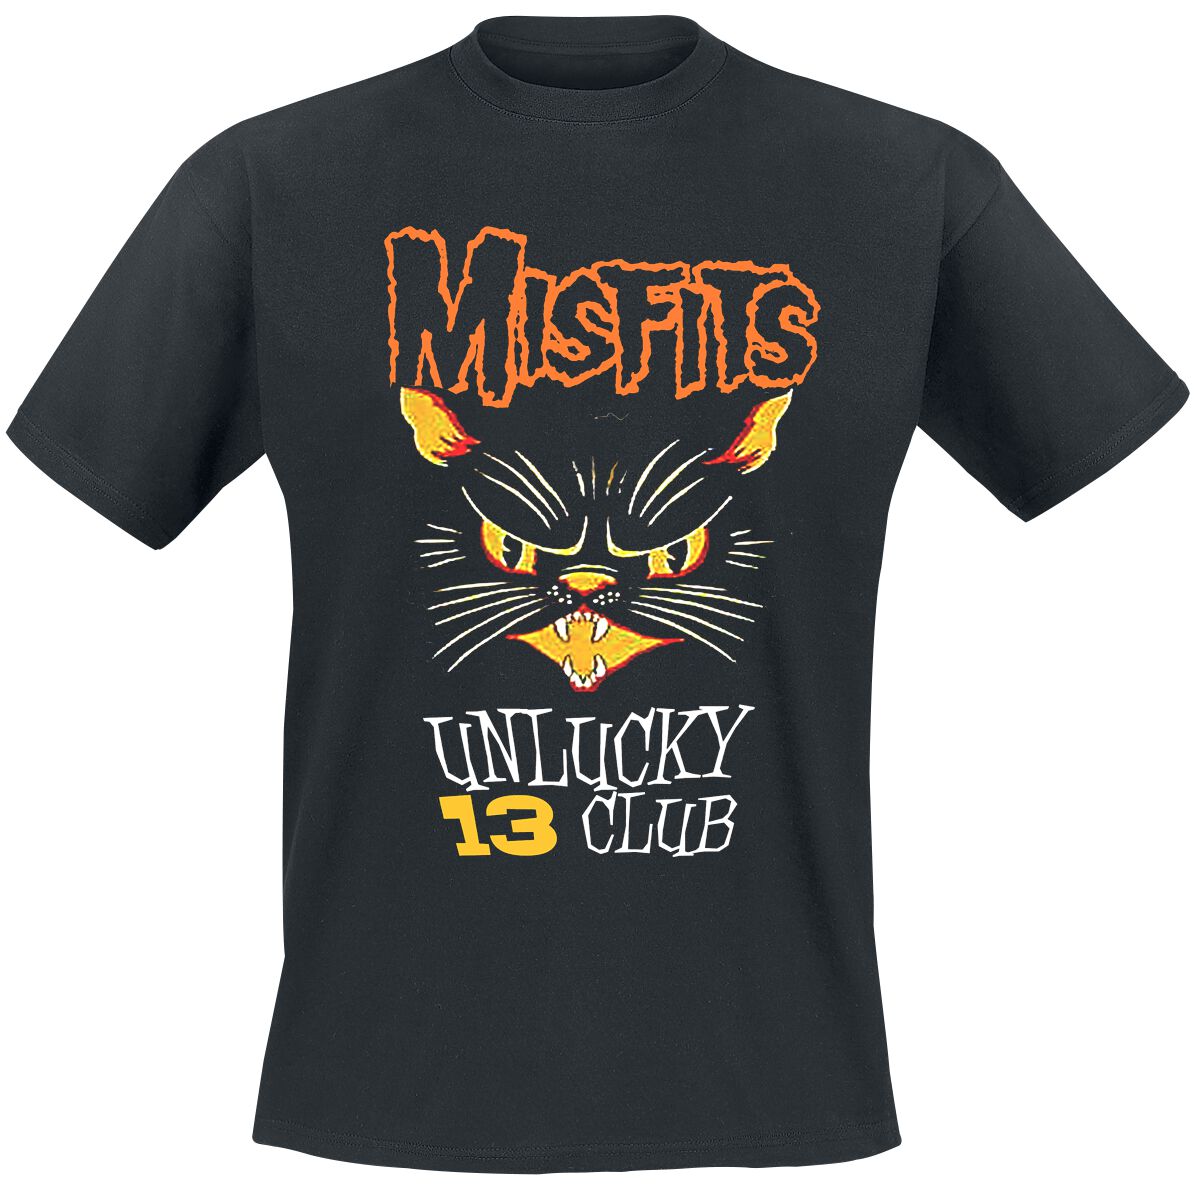 Misfits Unlucky Club T-Shirt schwarz in S